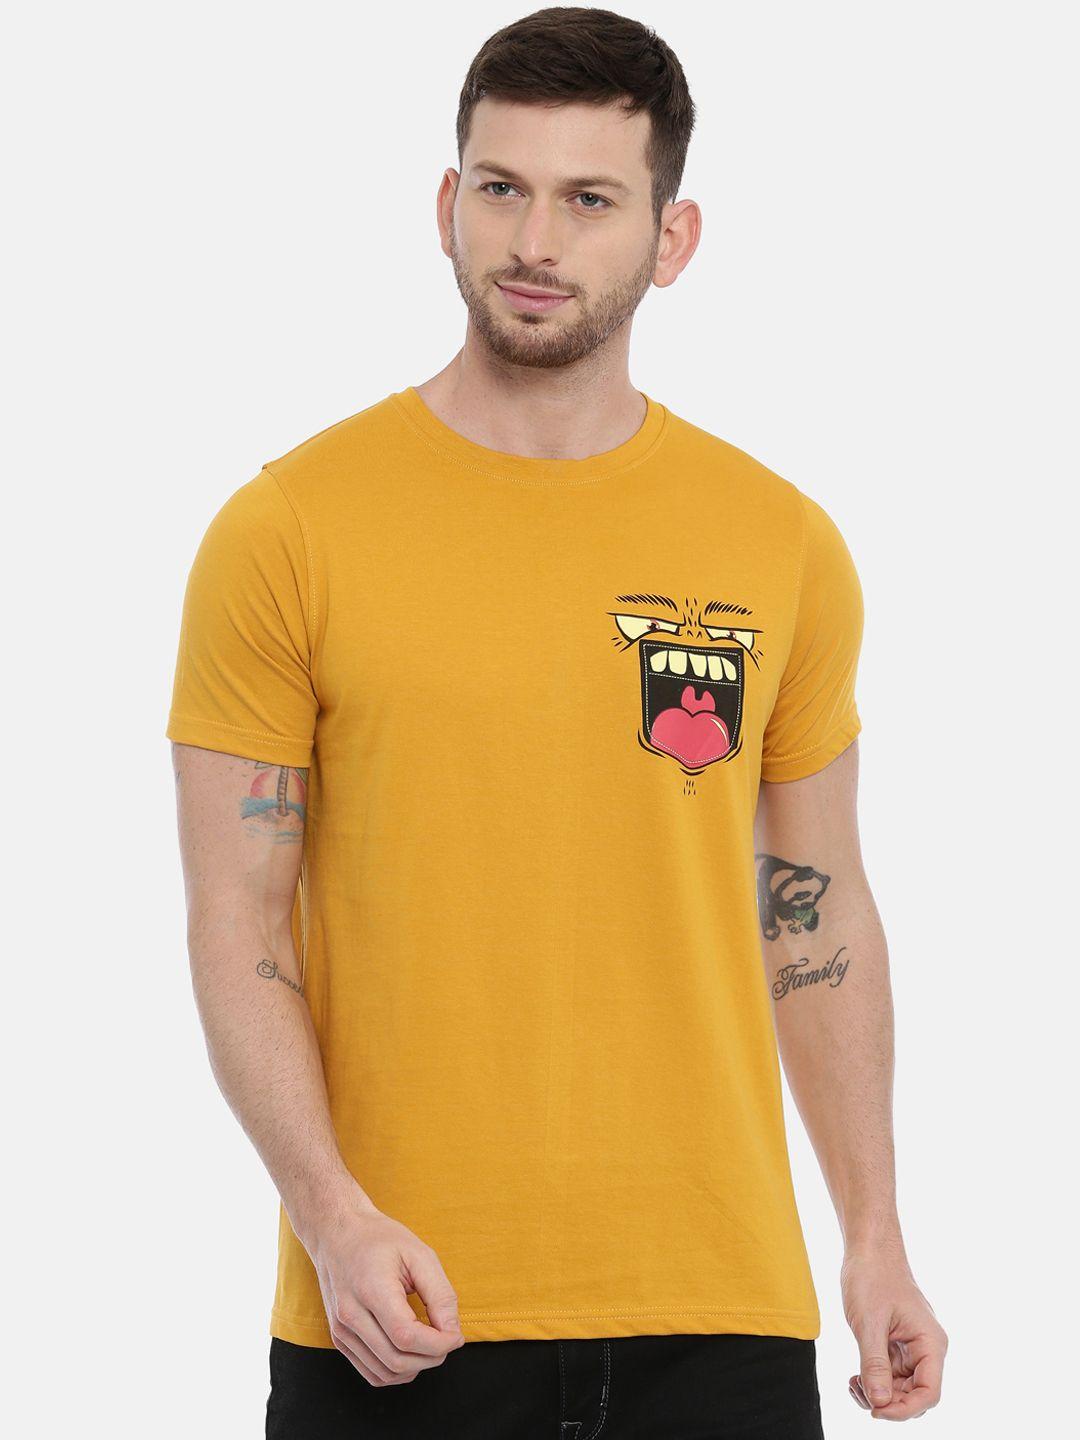 bushirt men mustard yellow printed round neck pure cotton t-shirt